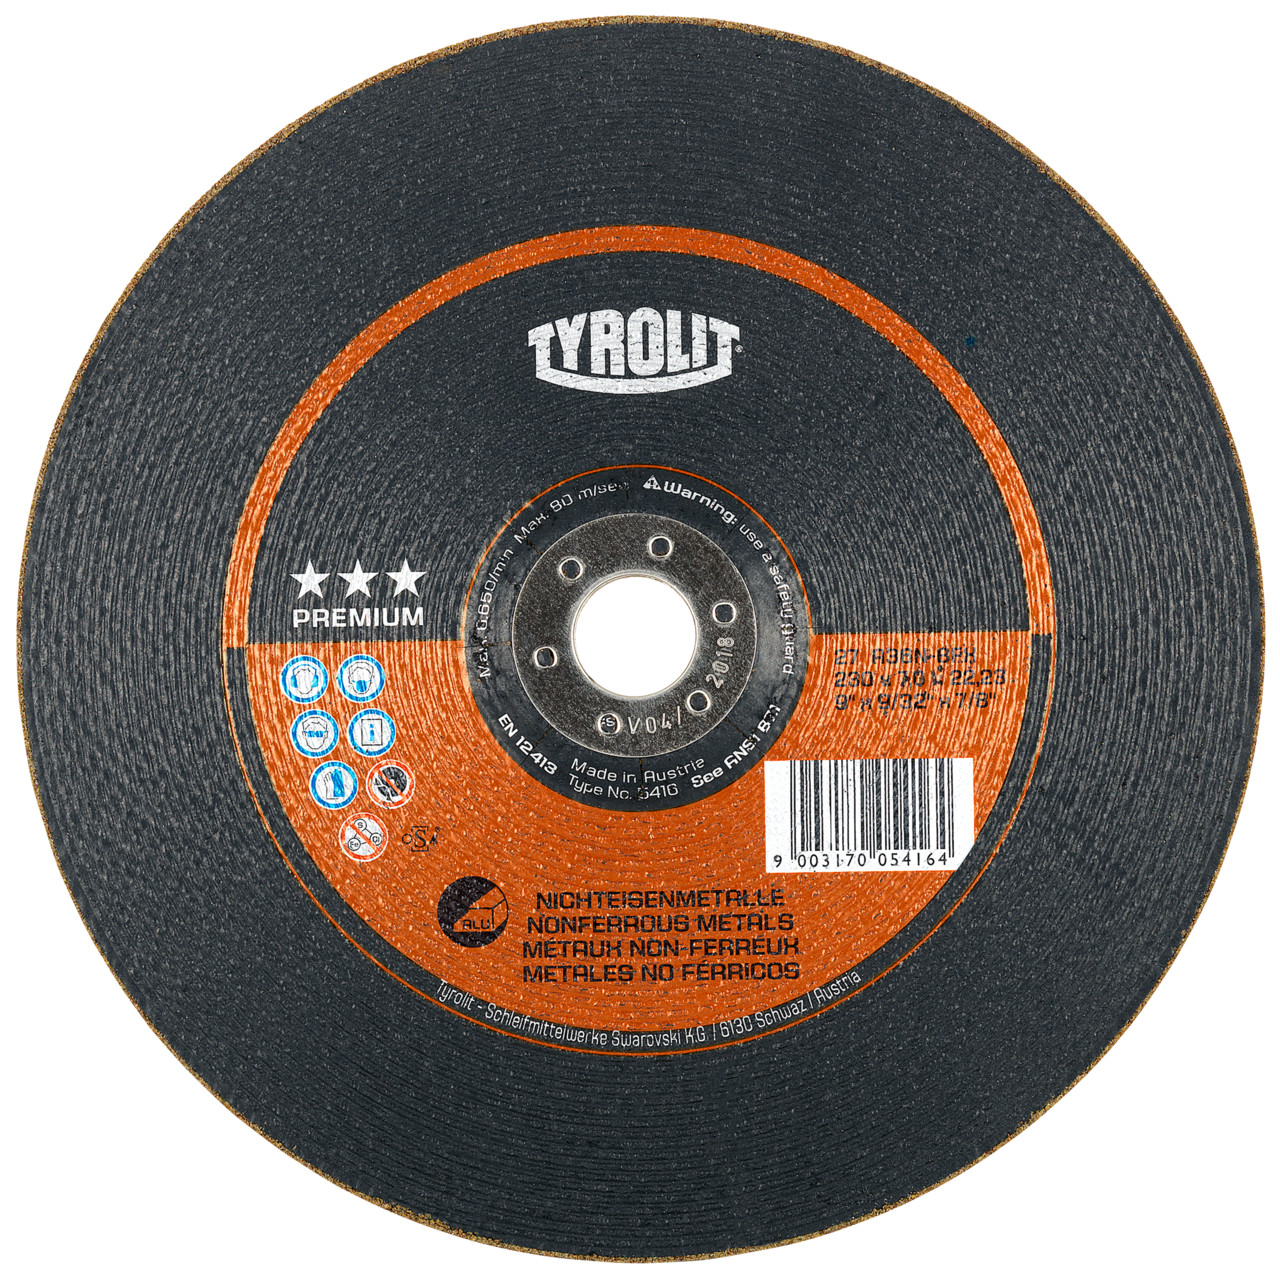 Tyrolit Roughing disc DxUxH 178x7x22.23 For non-ferrous metals, shape: 27 - offset version, Art. 576050